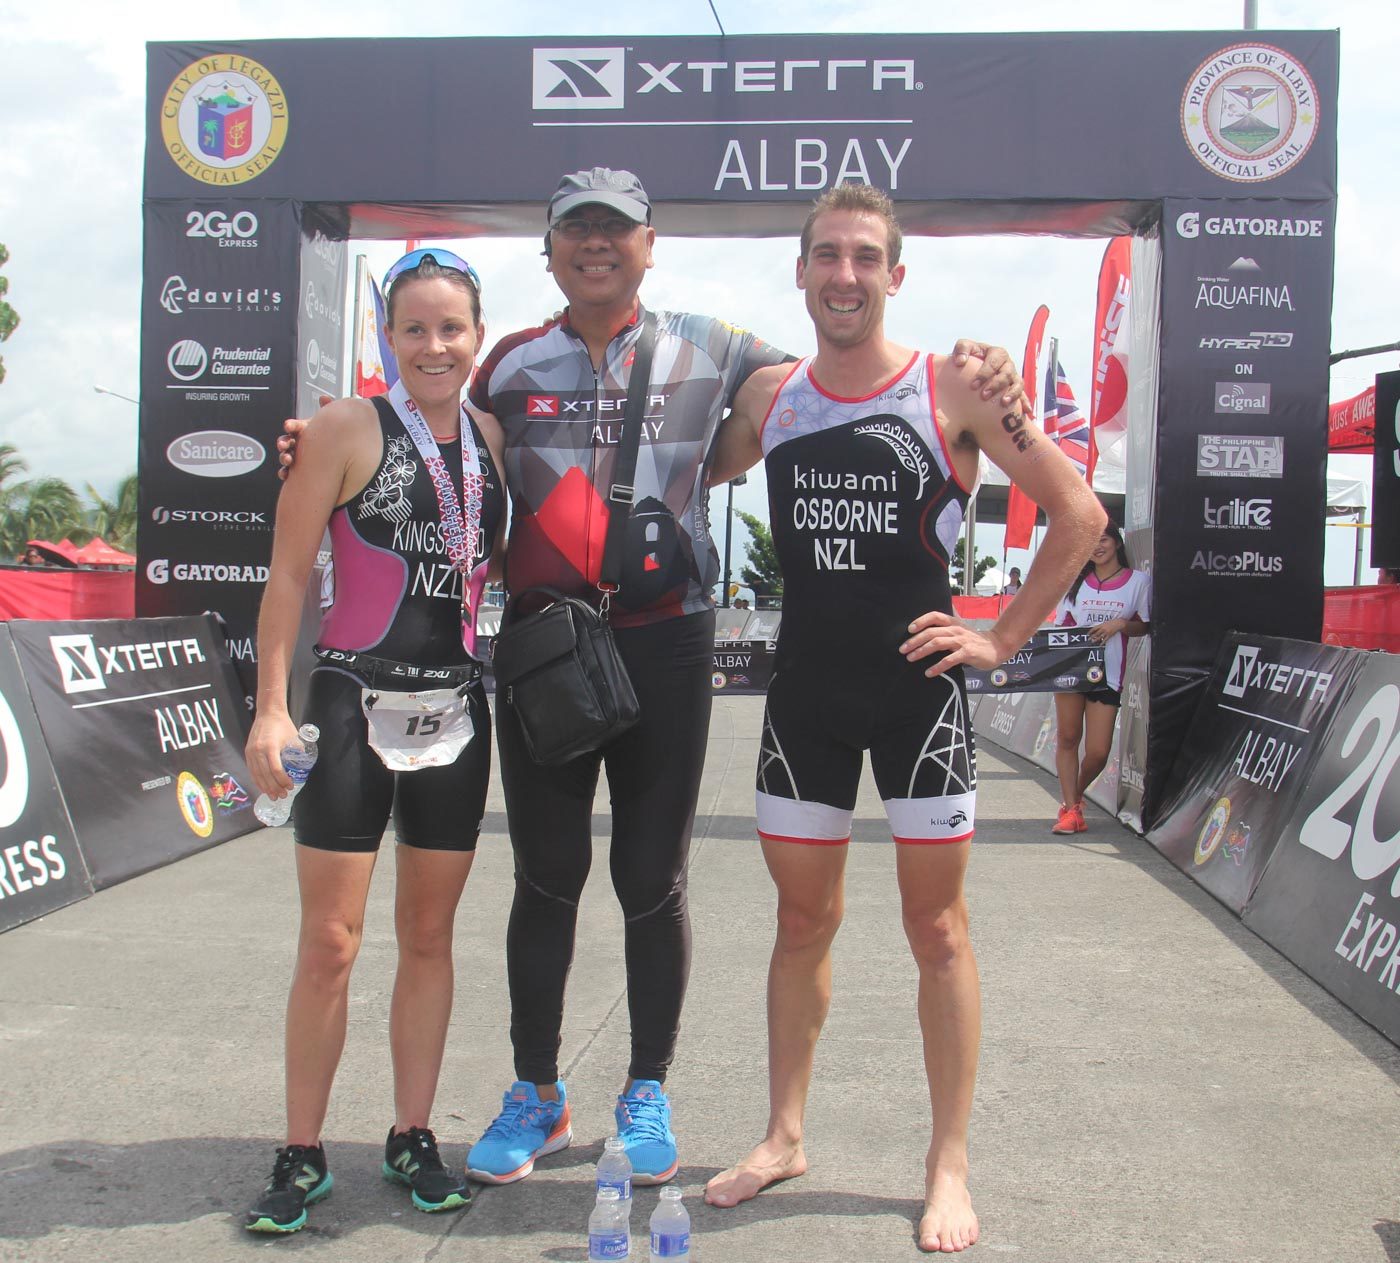 Couple sweeps Xterra Albay race titles